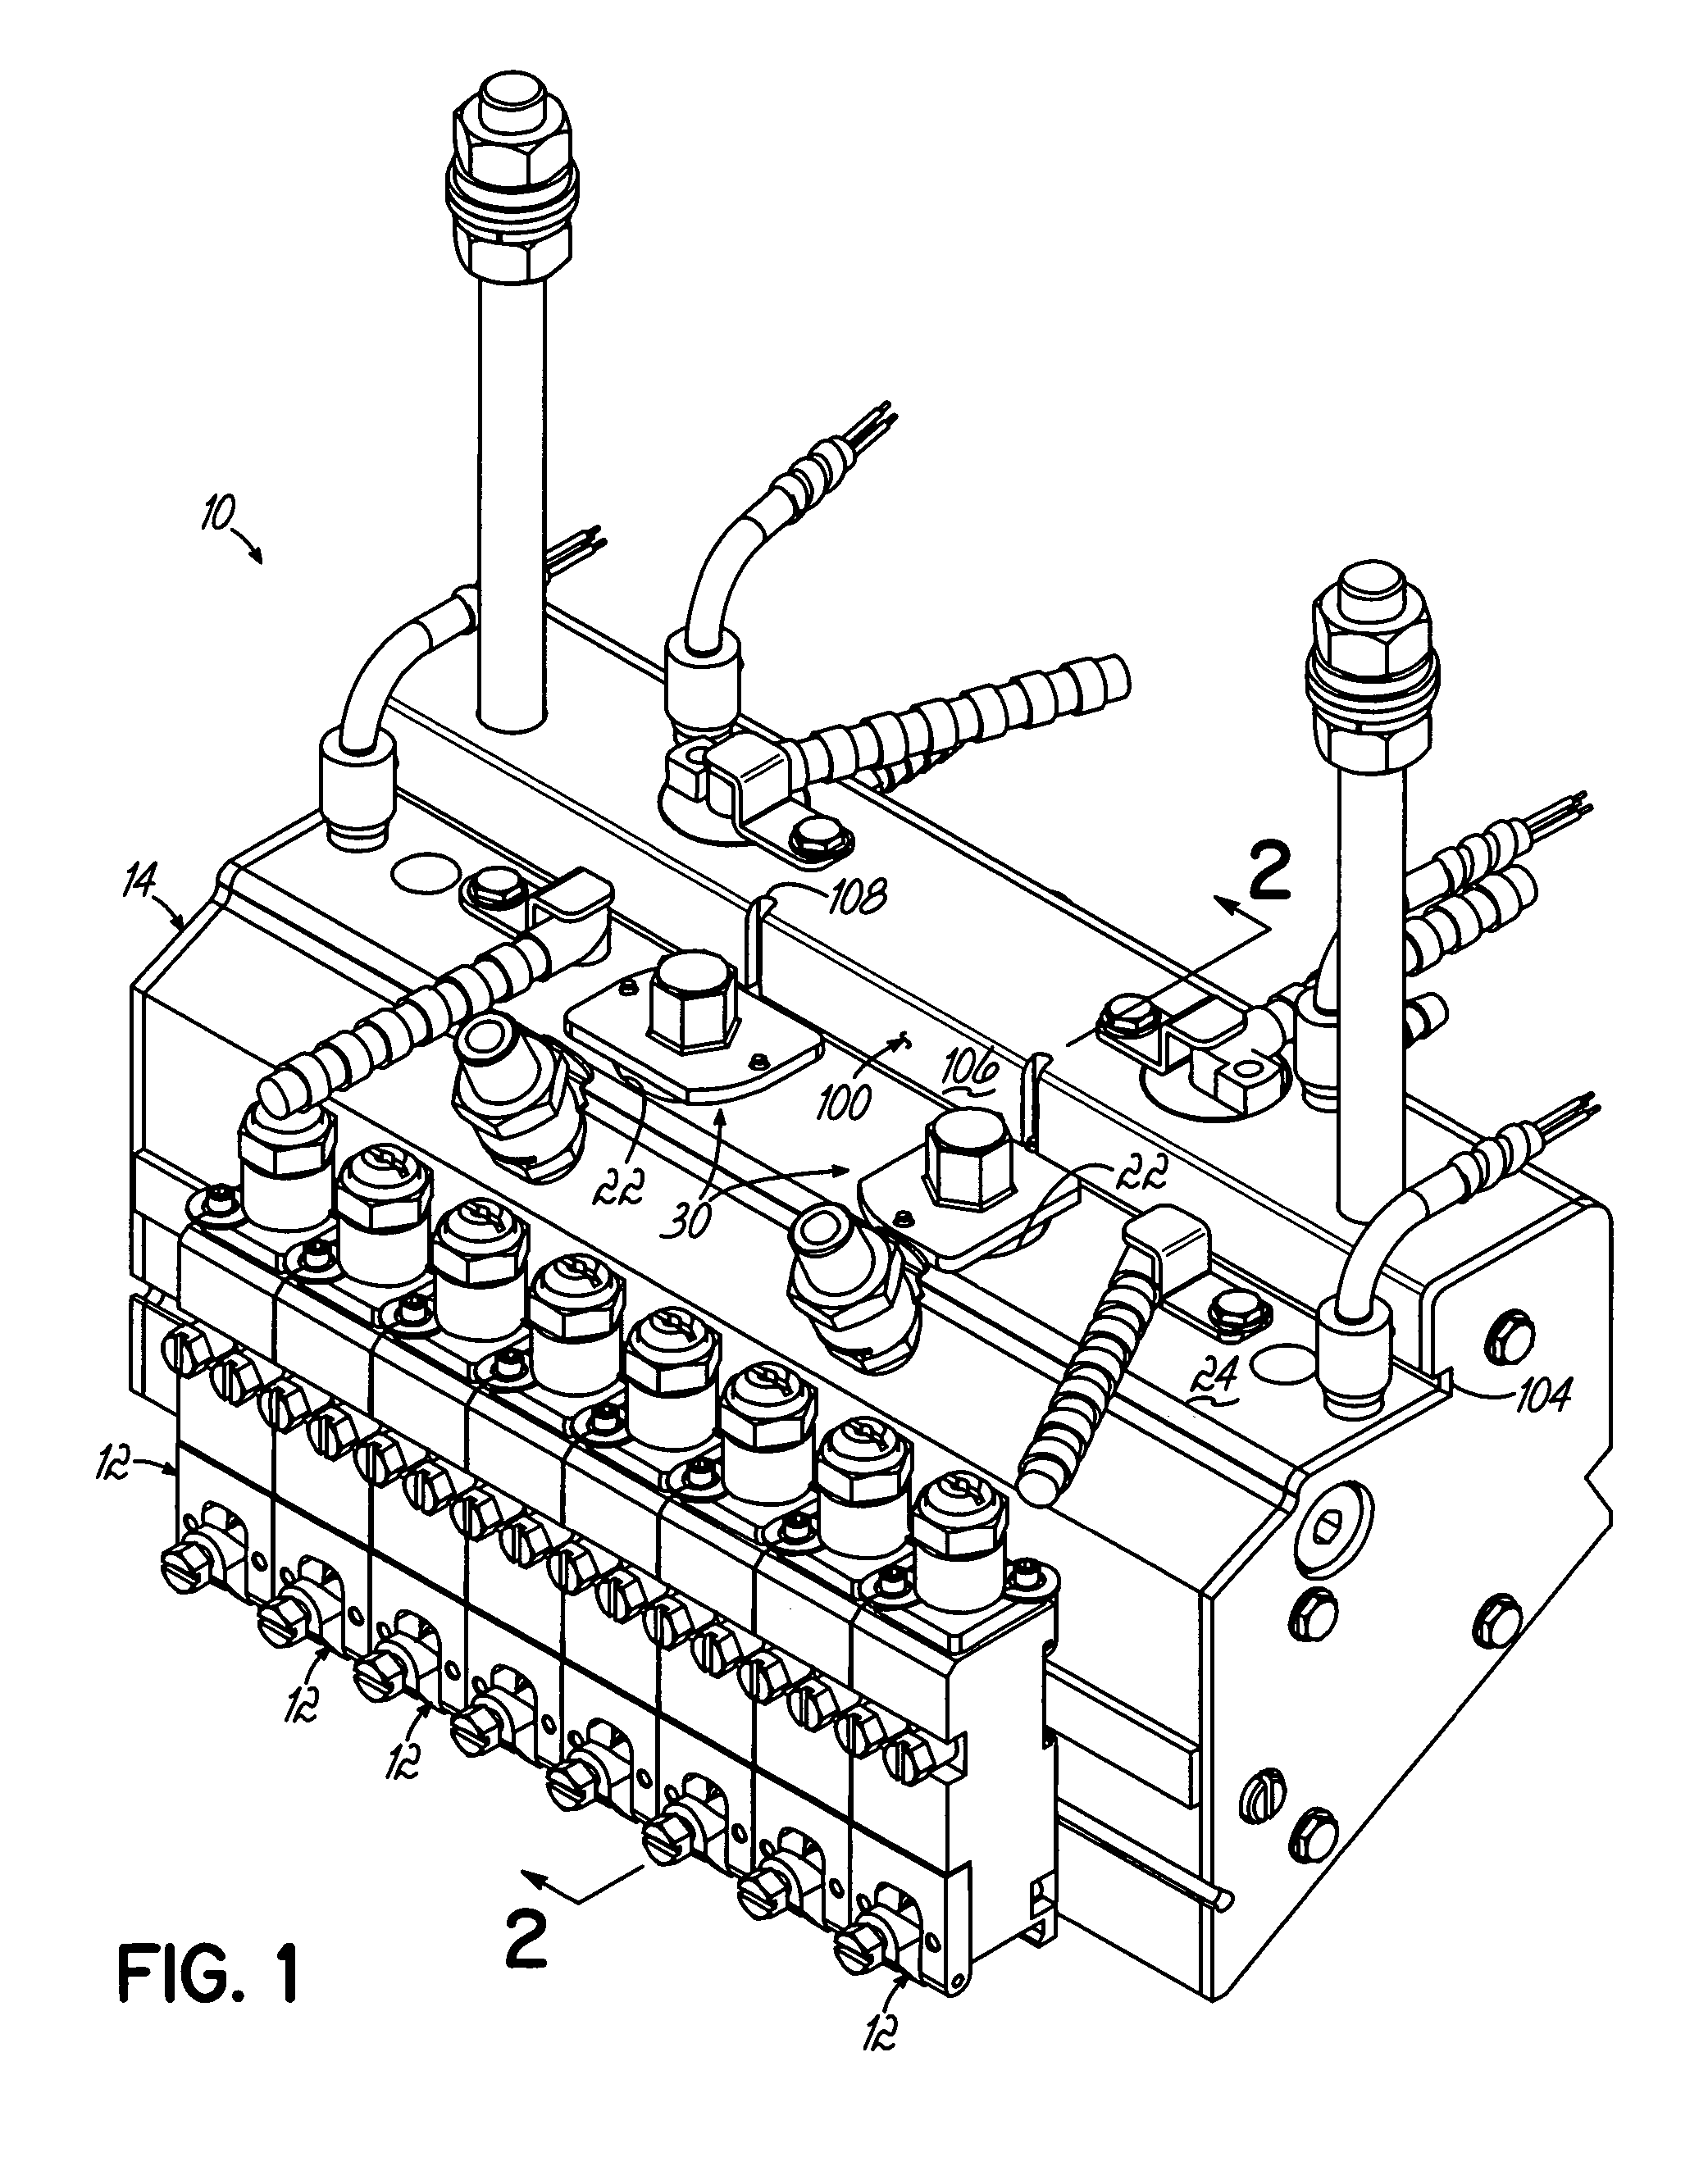 Liquid dispensing apparatus and a filter assembly for a liquid dispensing apparatus